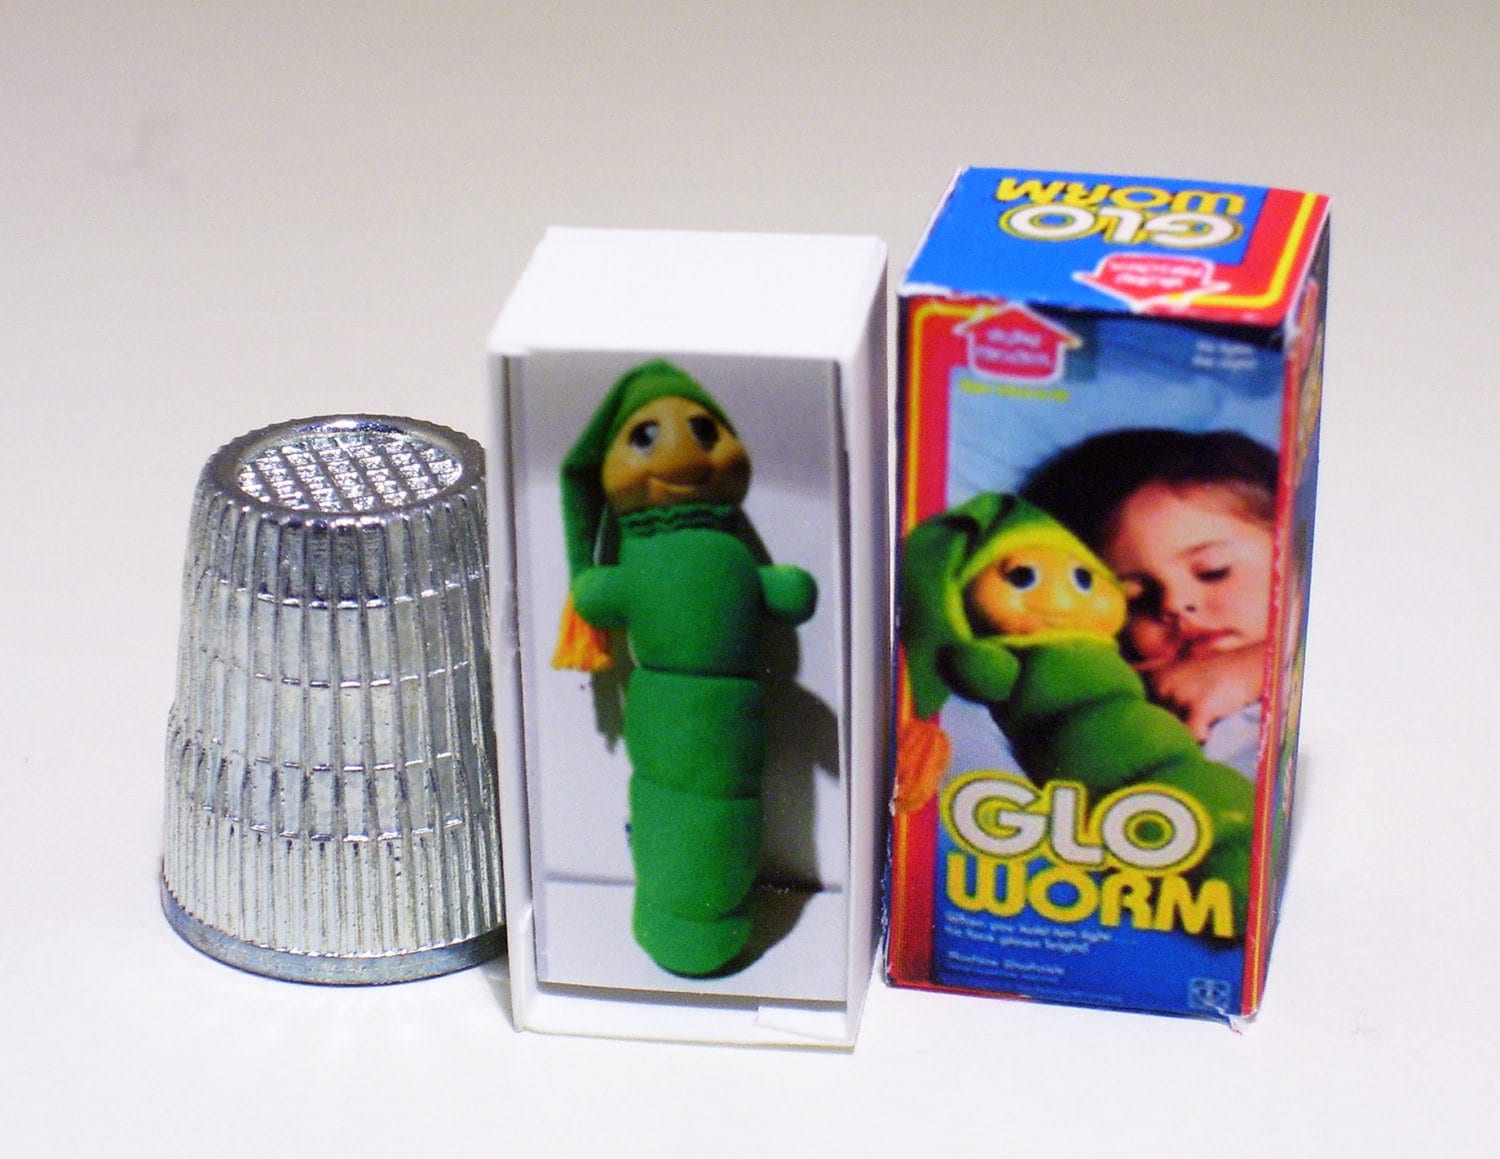 Glo Worm Toy Box Dollhouse Miniature 1:12 Scale Dollhouse Accessory 1980s  Dollhouse Glo Worm Baby Nursery Toy Miniature Box Replica 